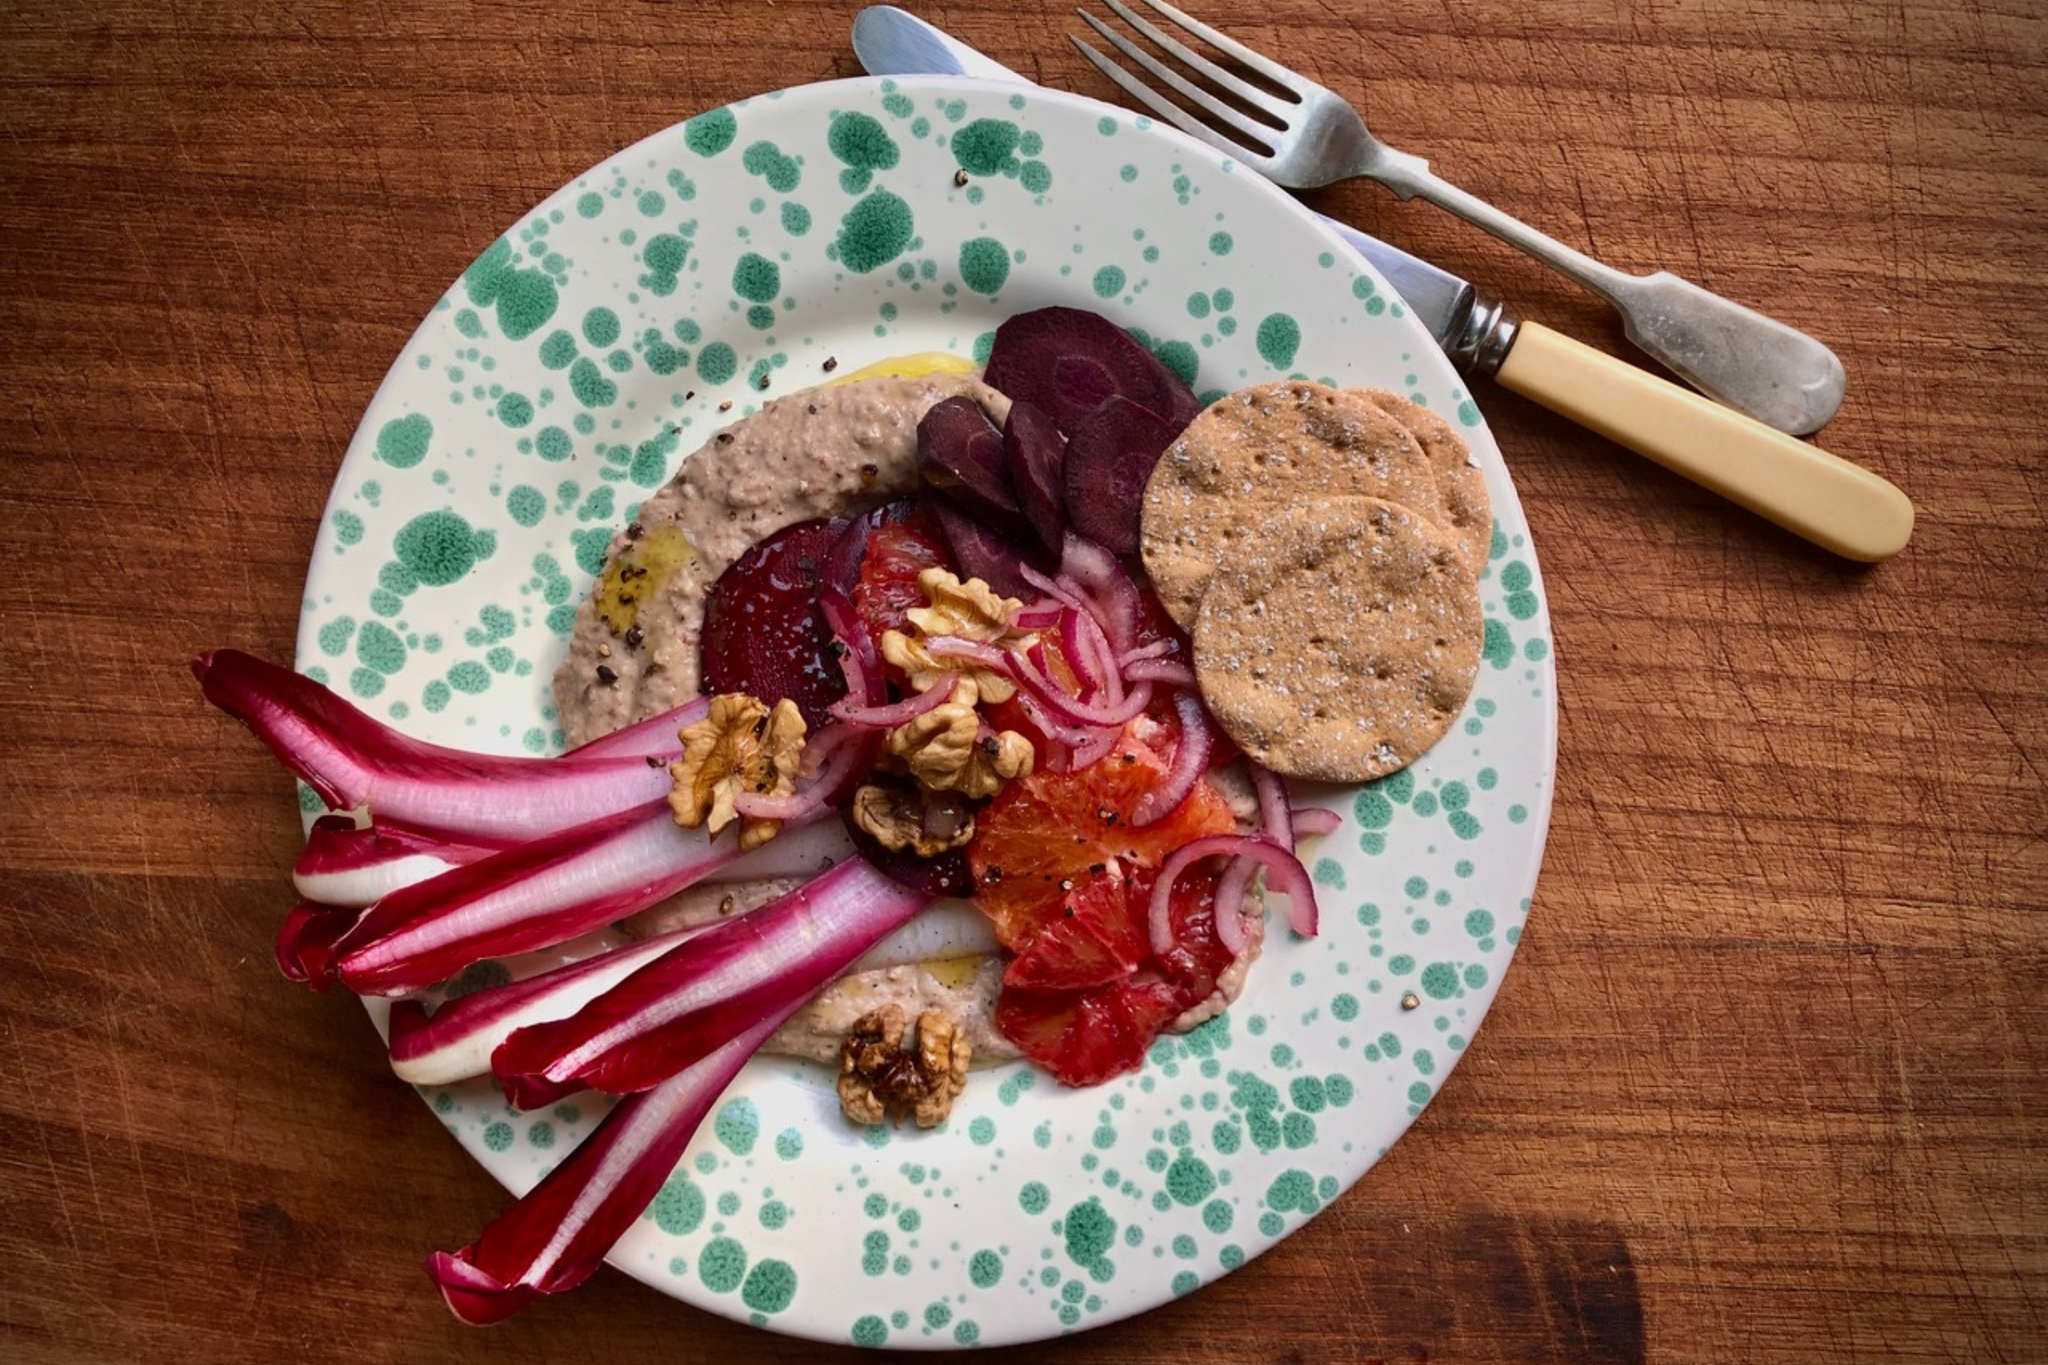 Warm Carlin Pea “Hummus” and Salad